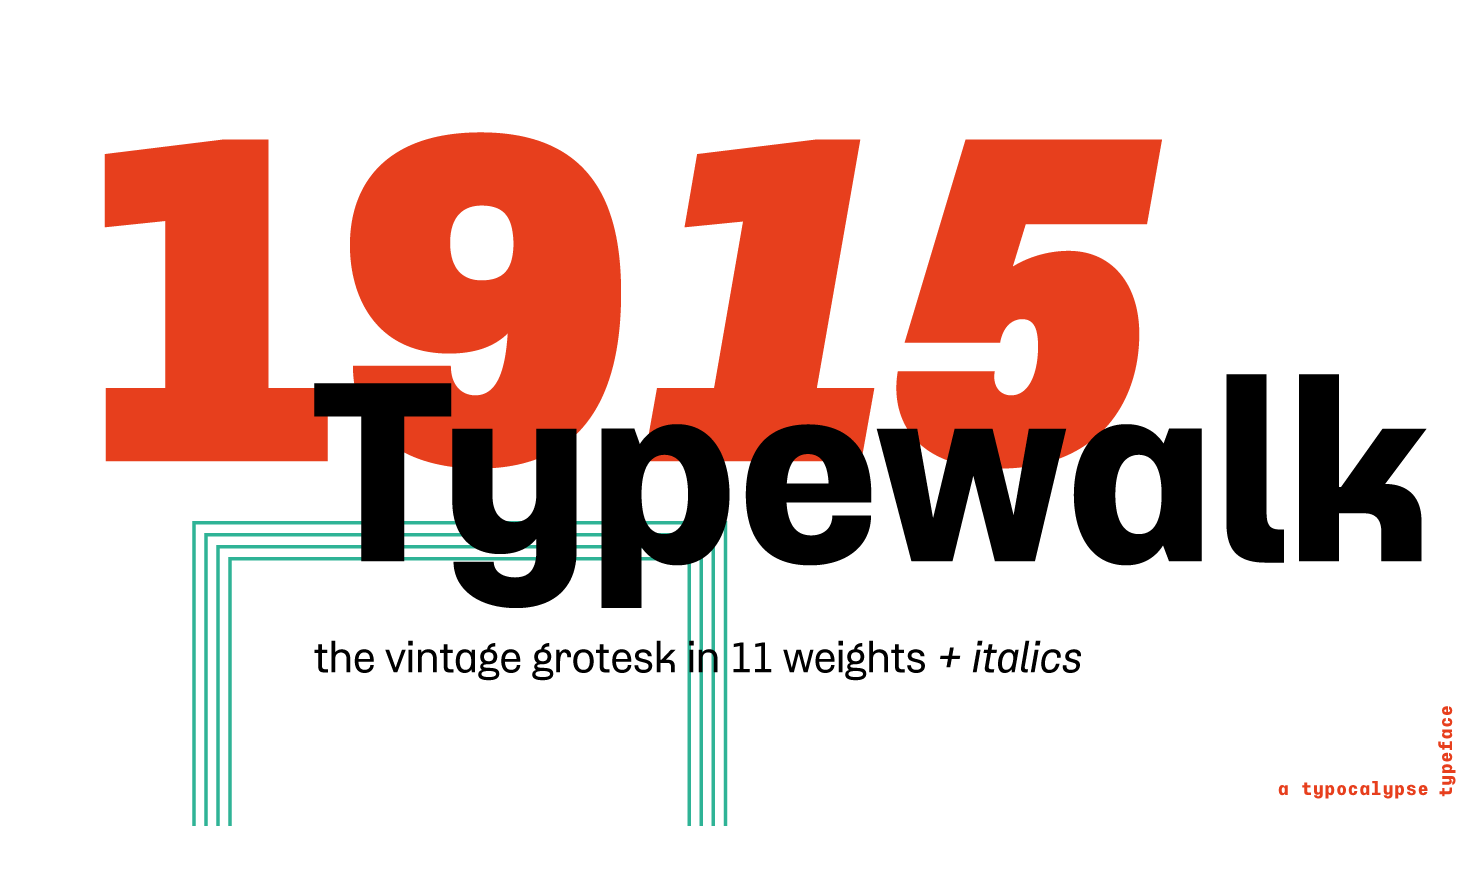 Typewalk 1915